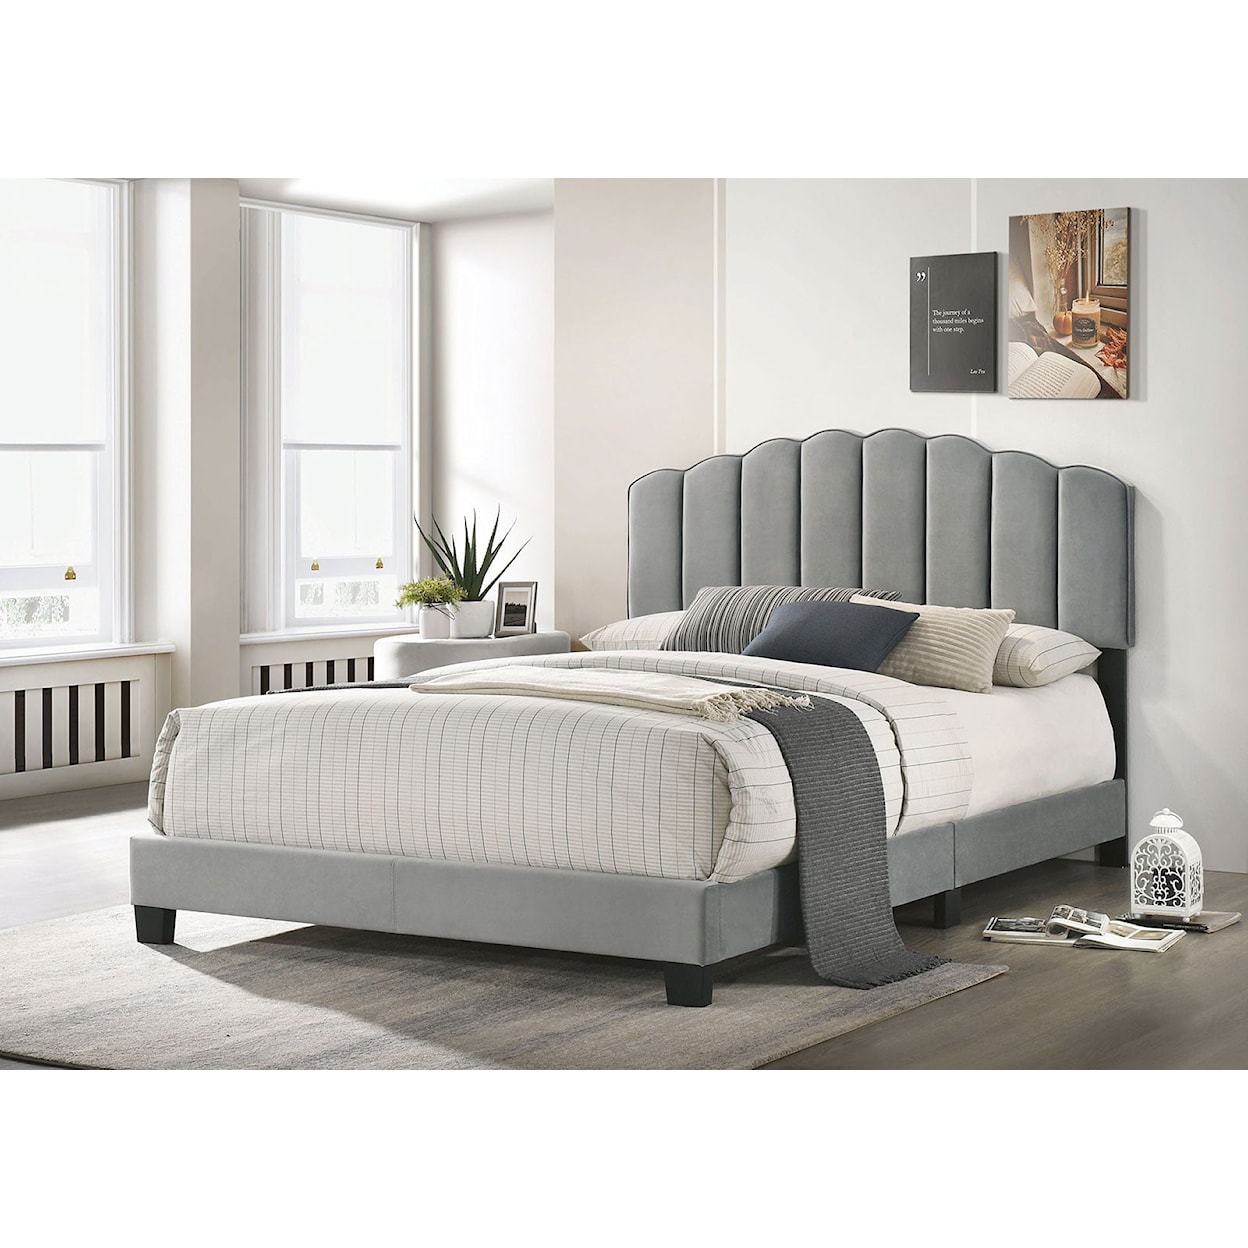 Furniture of America Nerina California King Bed